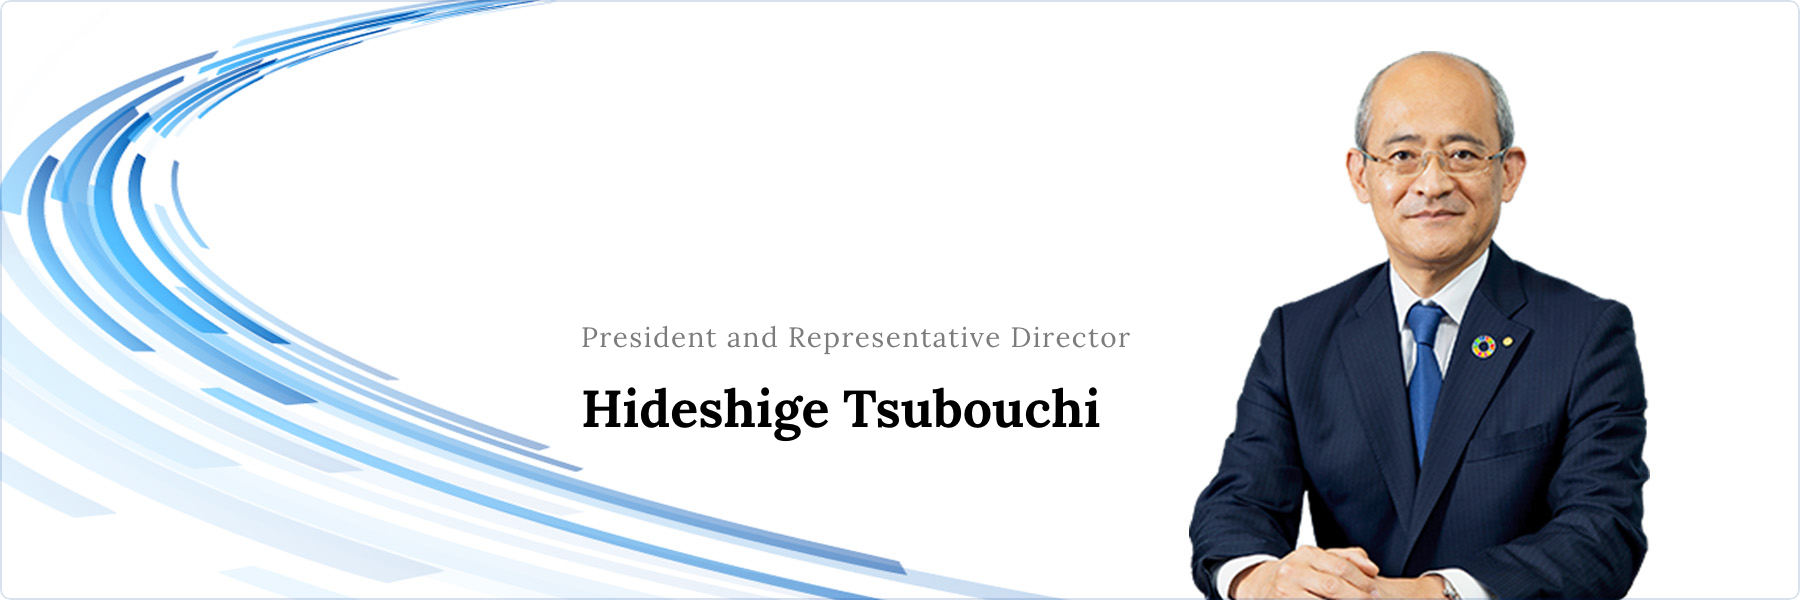 President and Representative Director Hideshige Tsubouchi